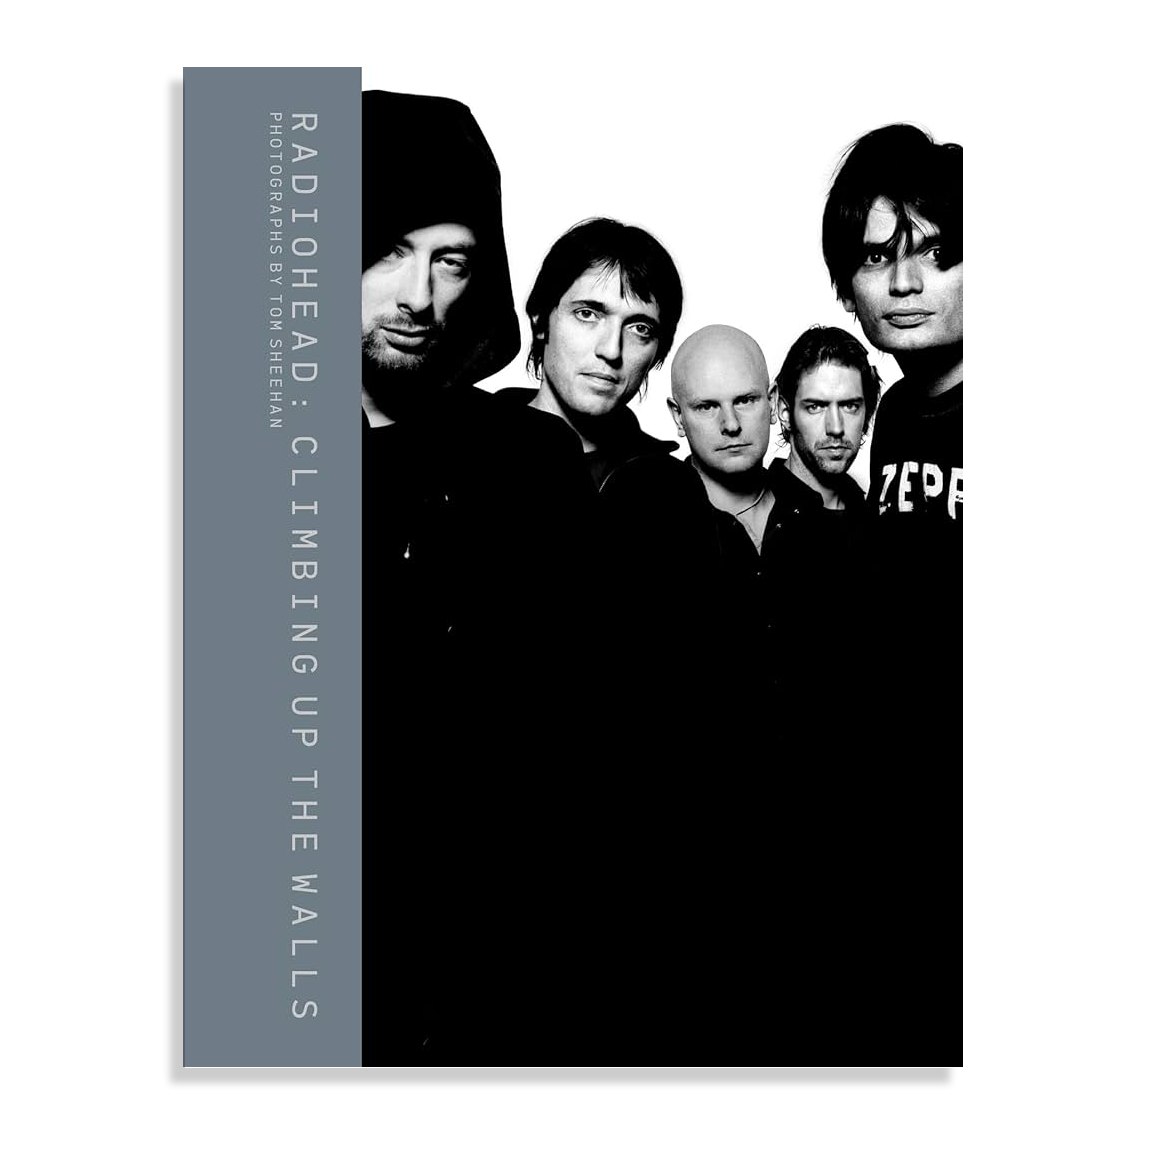 Tom Sheehan - Radiohead - Climbing Up the Walls: Hardback Book (Signed by author Tom Sheehan)